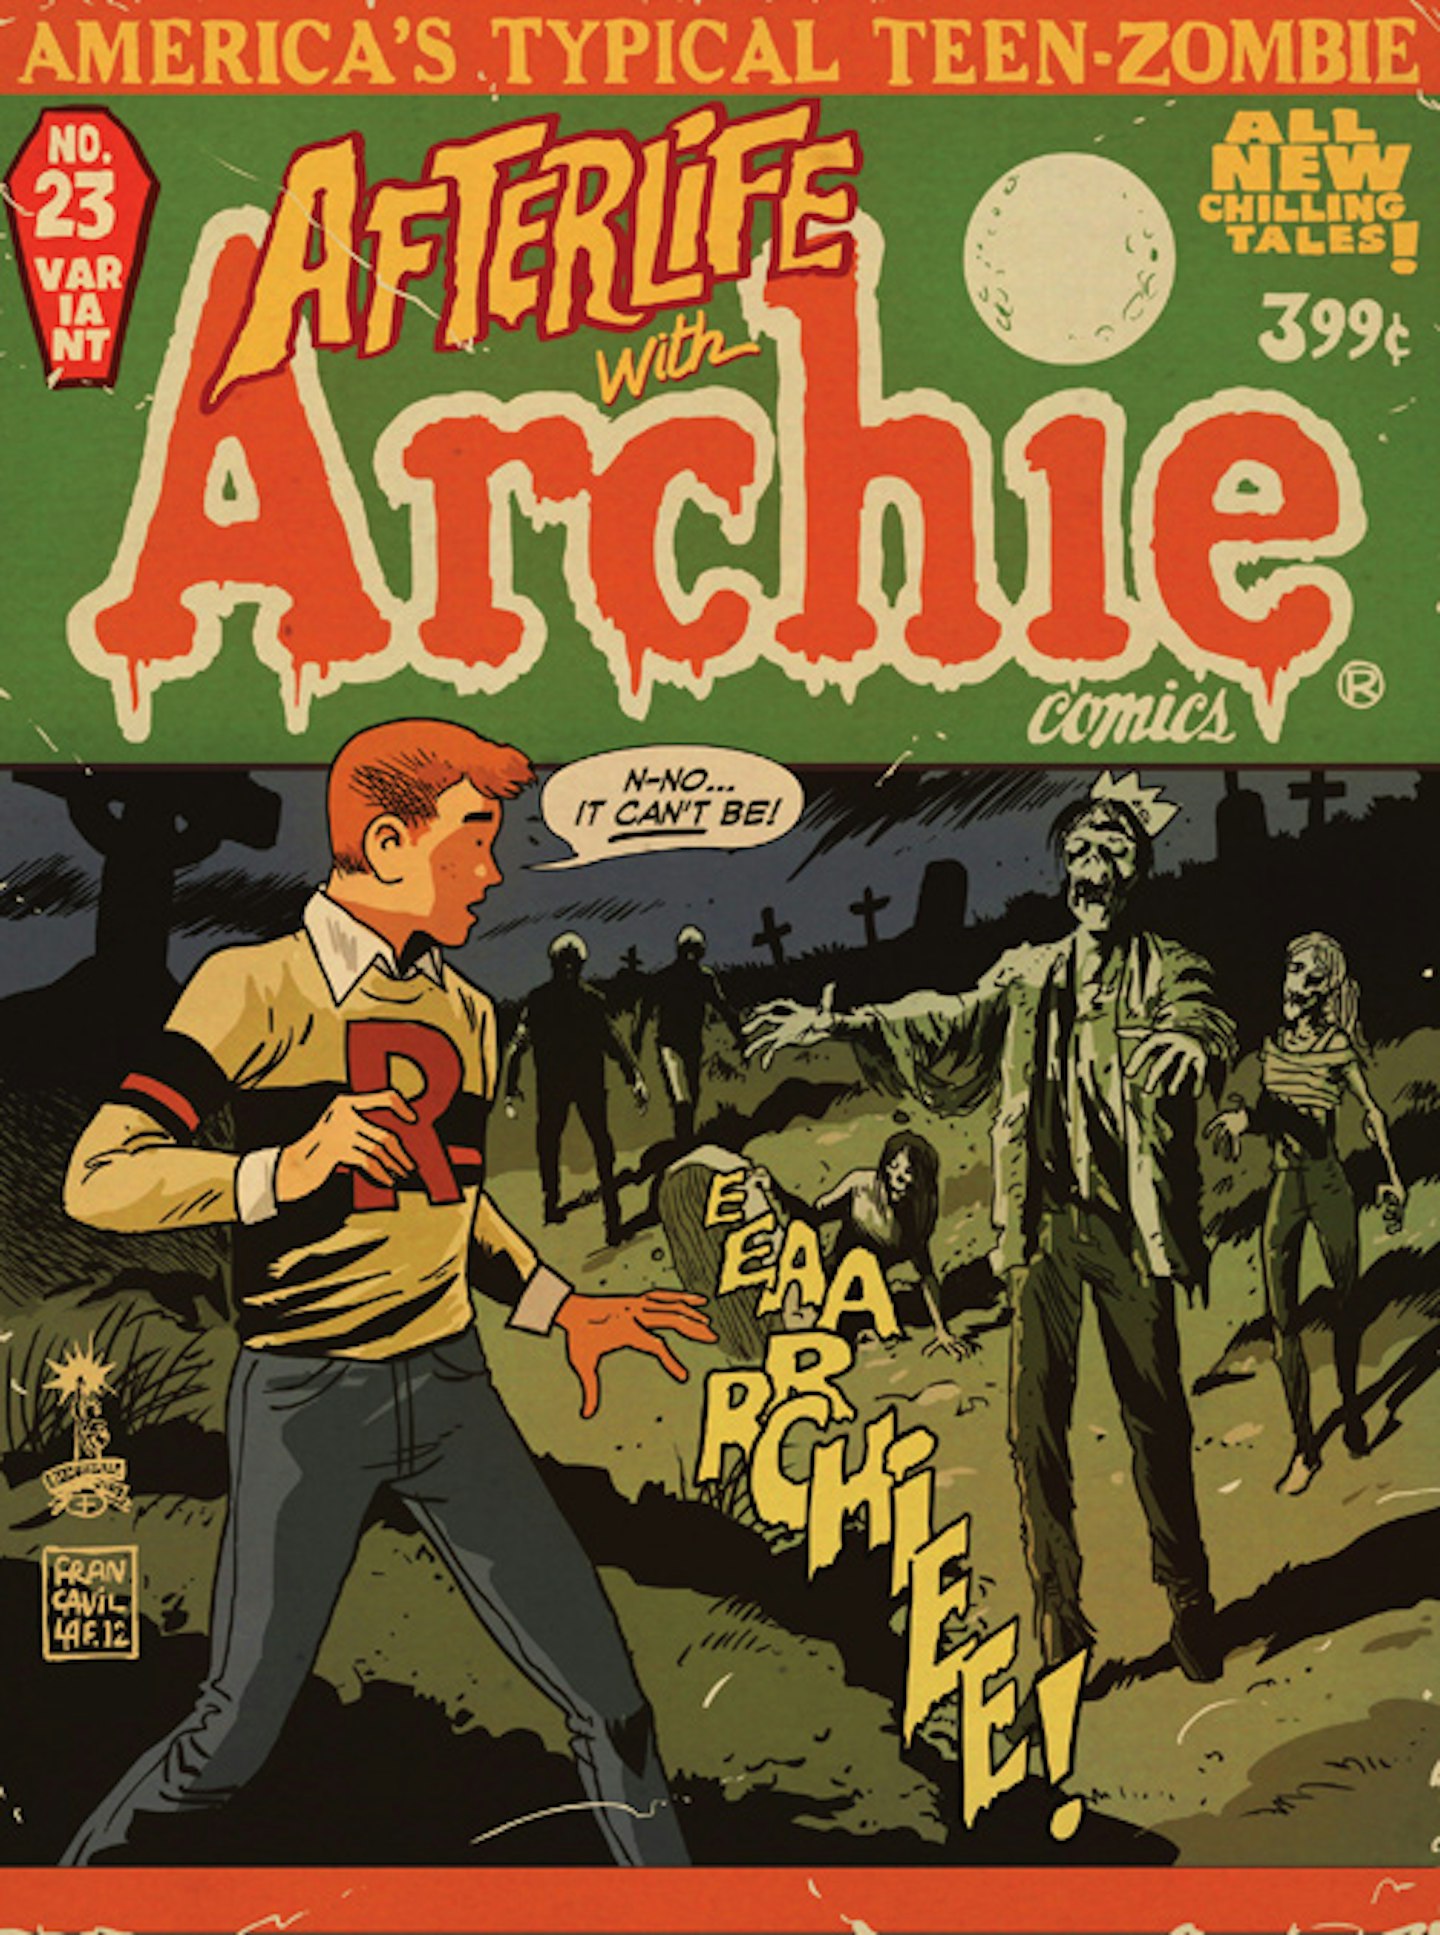 Warner Bros. Plans Archie Comics Film